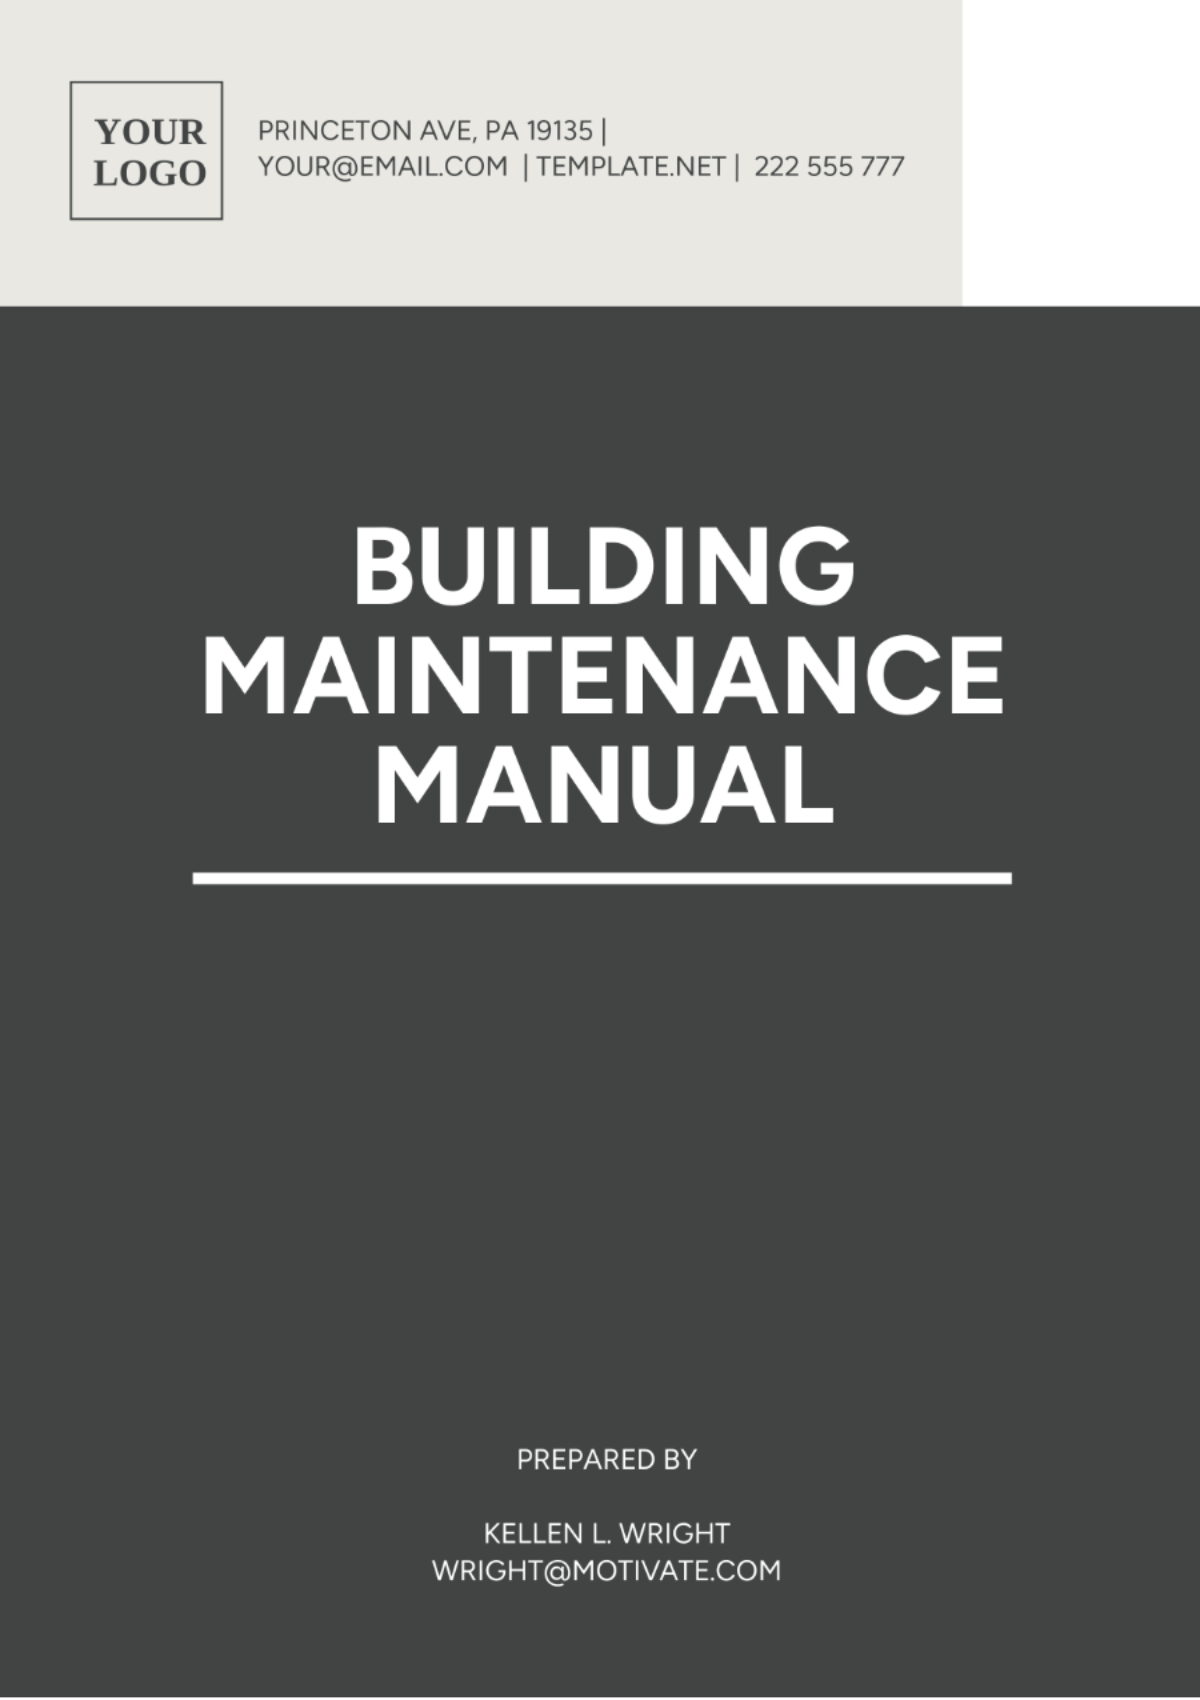 Building Maintenance Manual Template